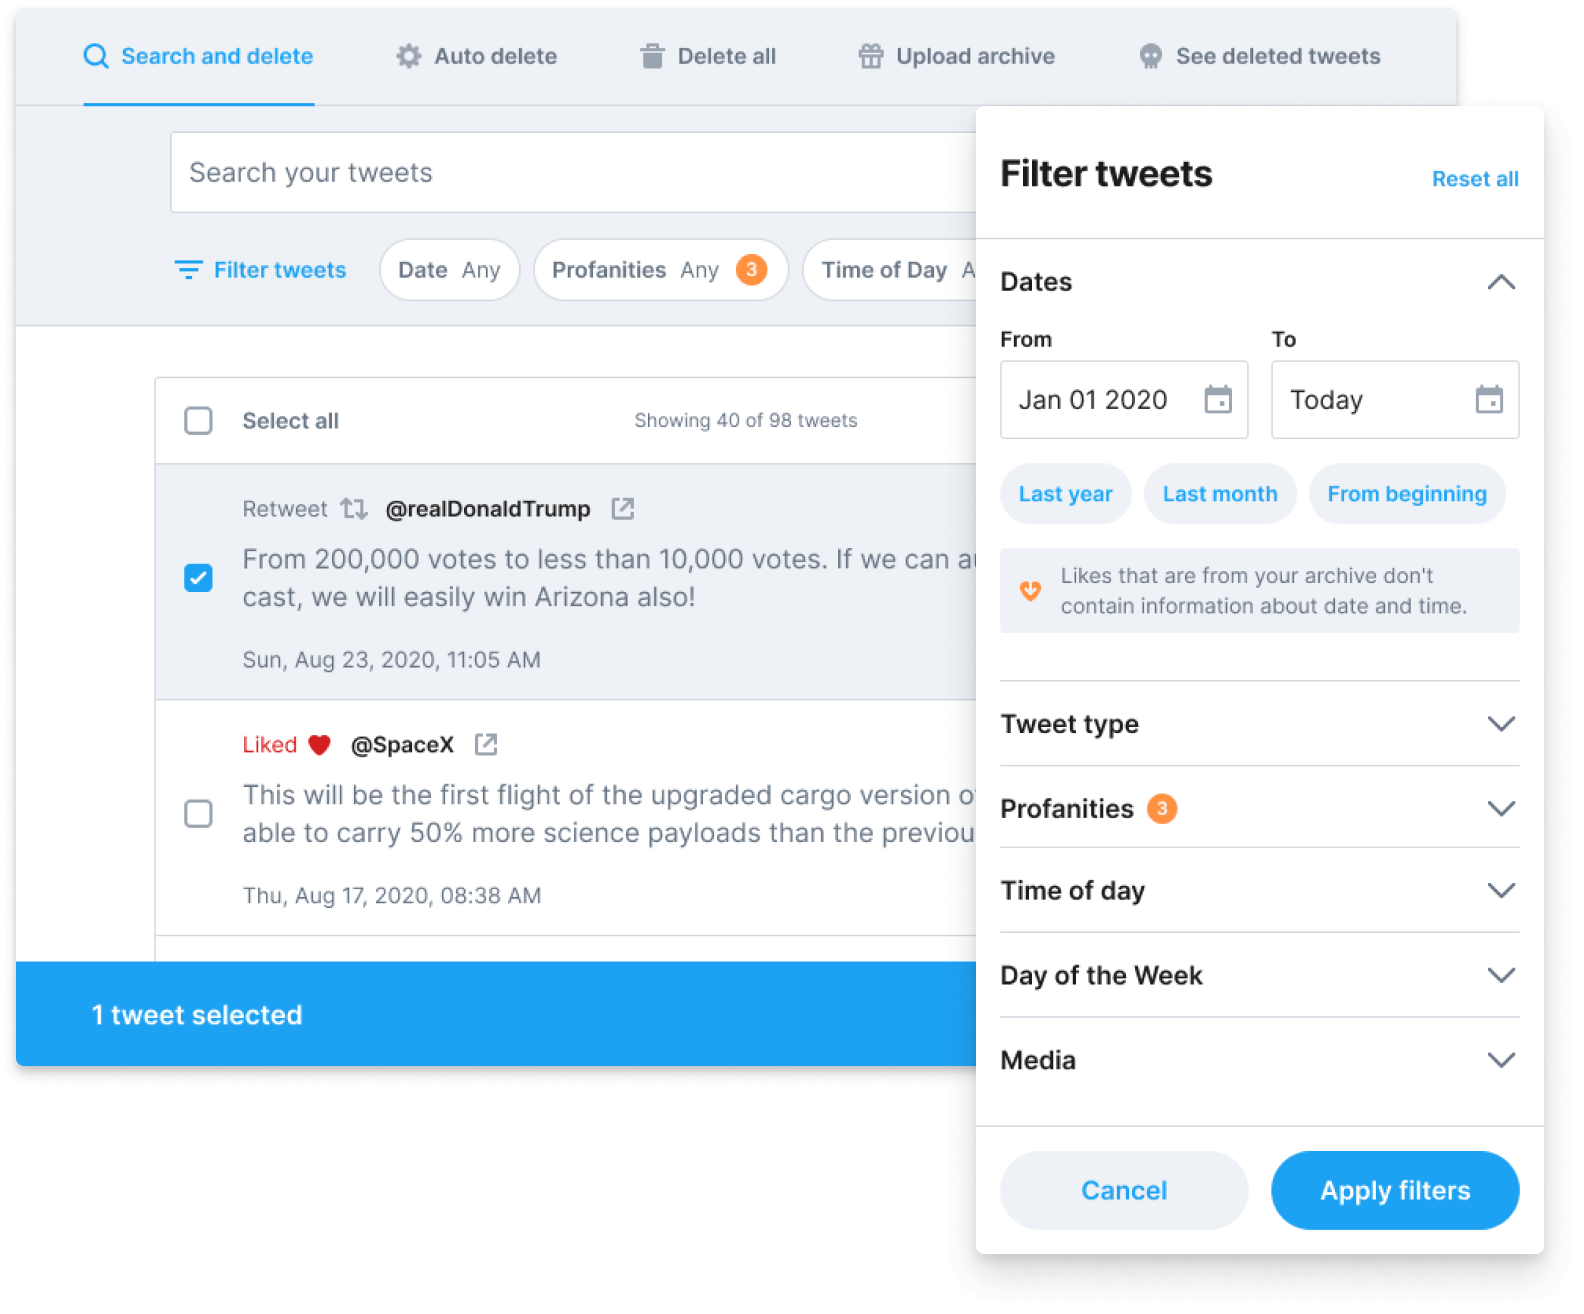 Screenshot of Tweetdeleter’s interface for browsing and deleting tweets